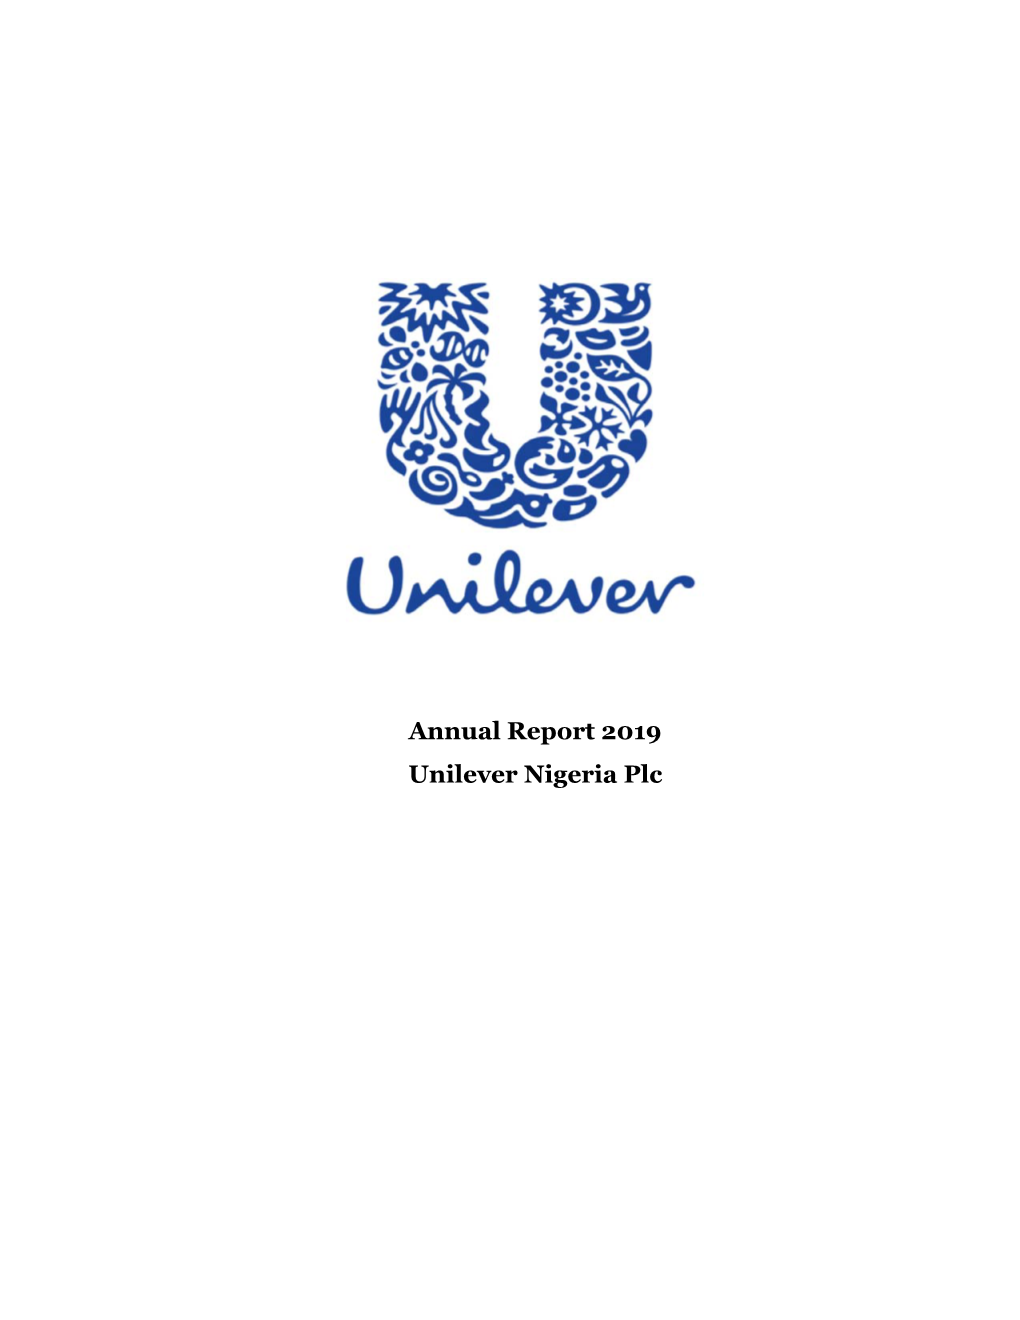 Unilever Nigeria Plc 2019 Audited Financial Statements